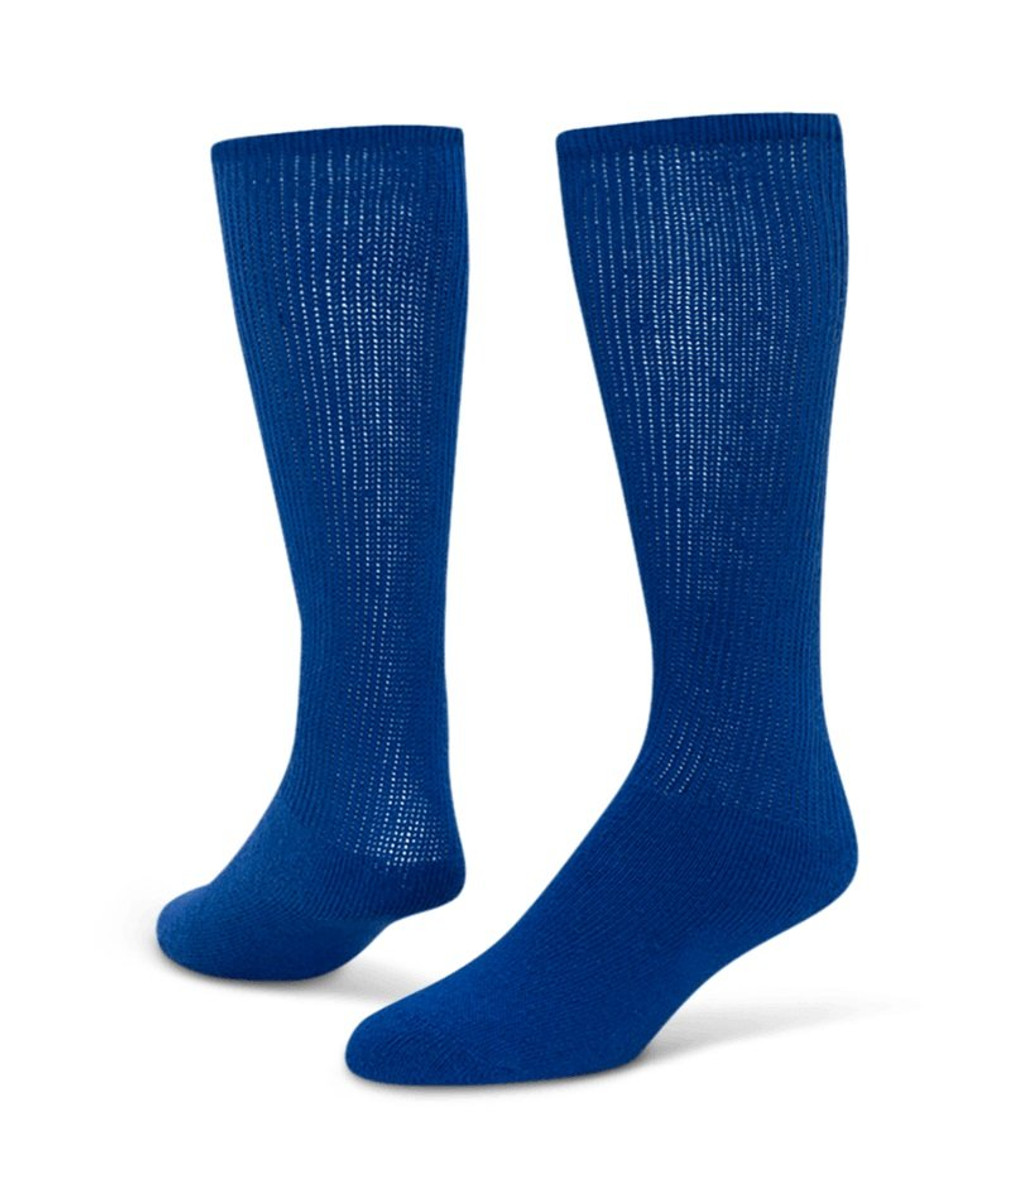 Team Tube Knee High Sports Socks - Royal Blue